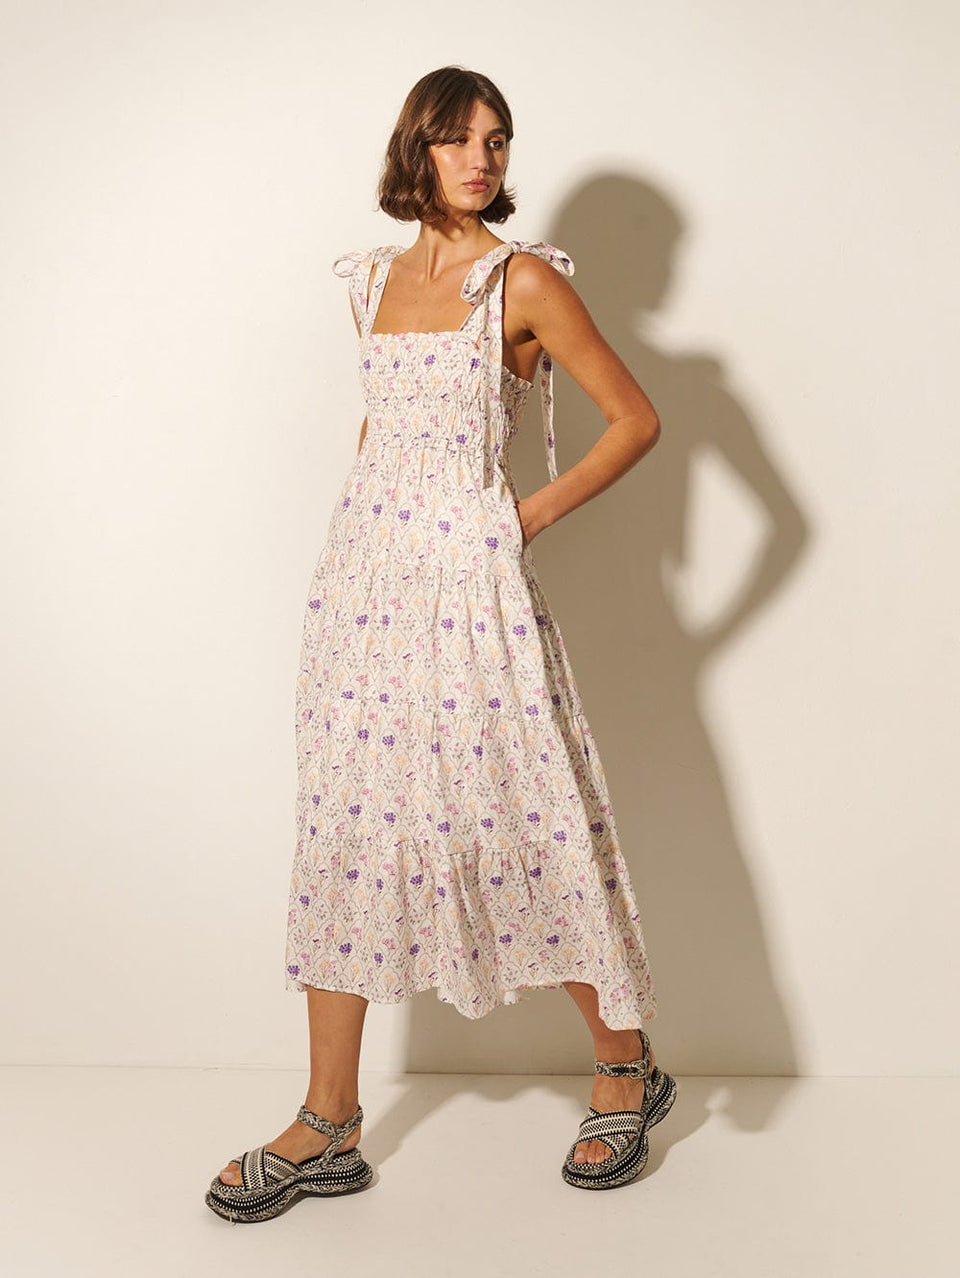 Fleur Midi Dress KIVARI | Model wears white and purple floral print midi dress side view